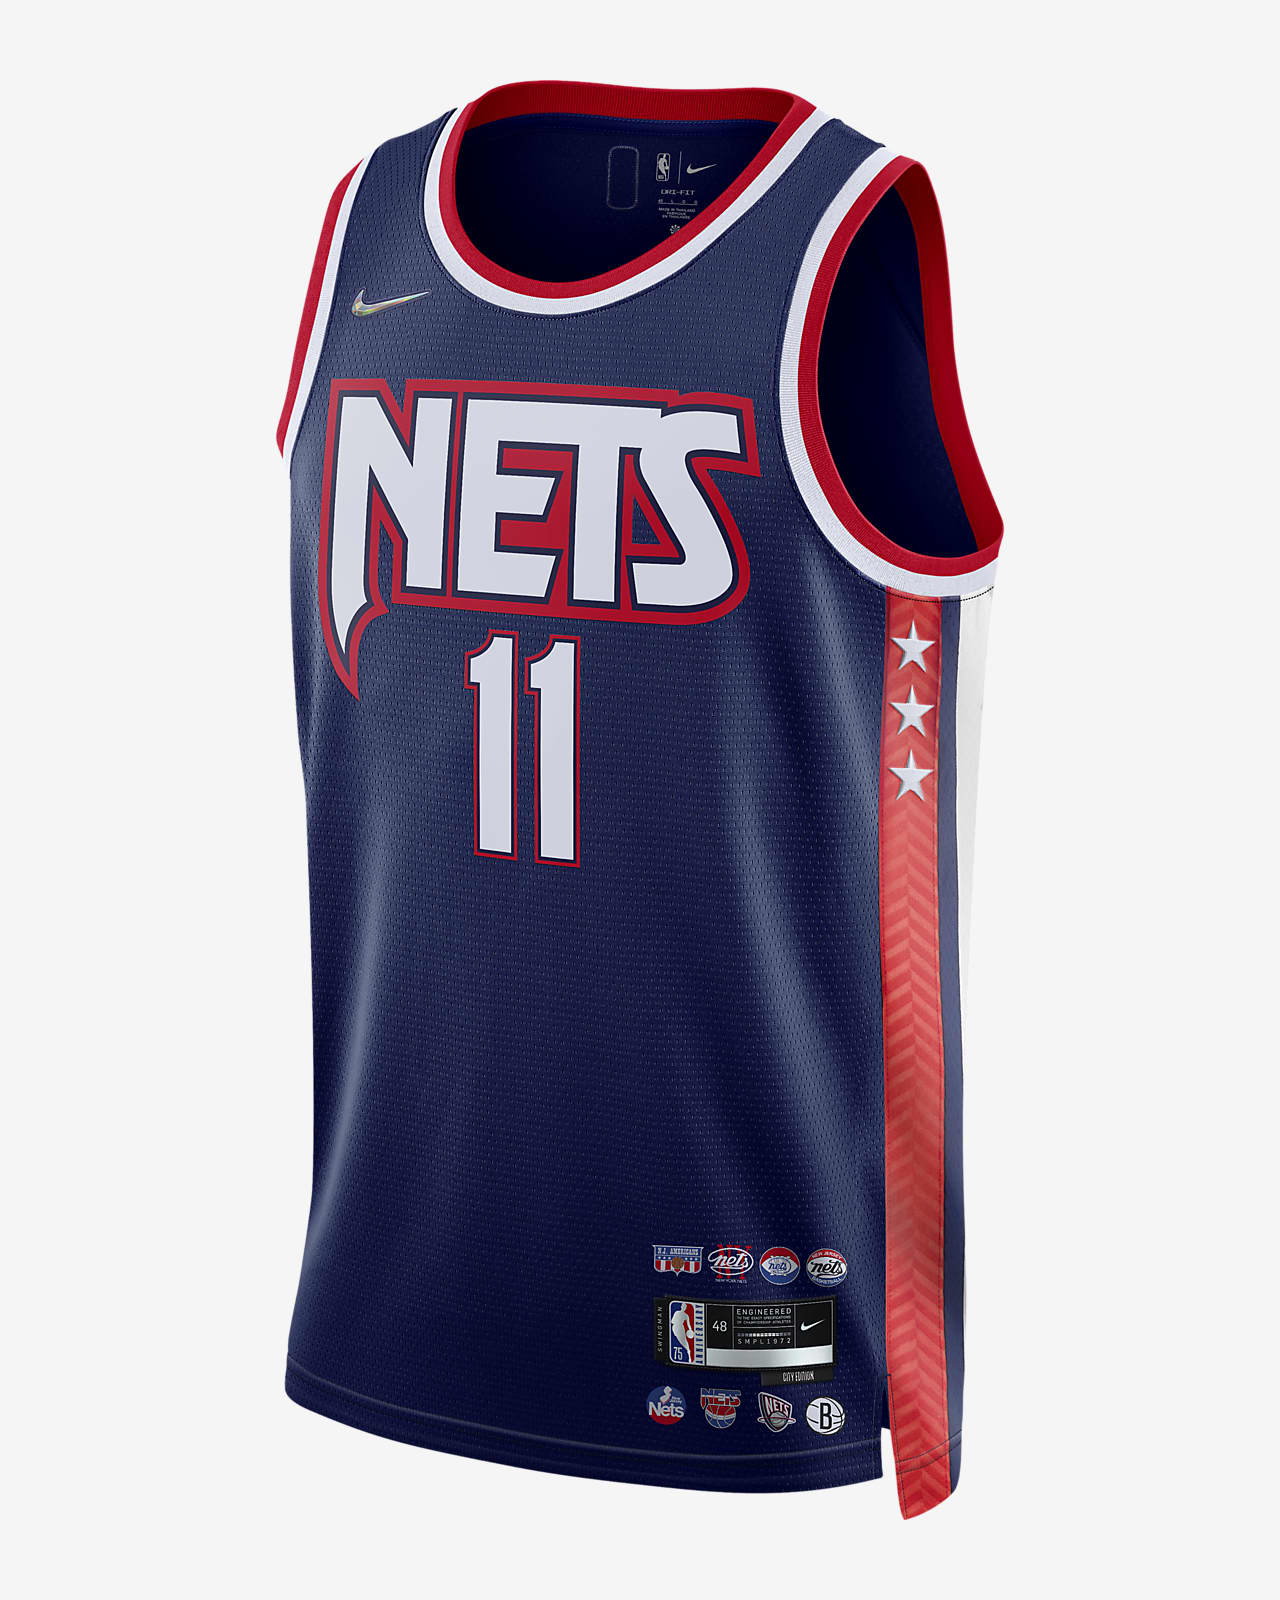 Brooklyn Nets City Edition Nike Dri-FIT NBA Swingman Jersey